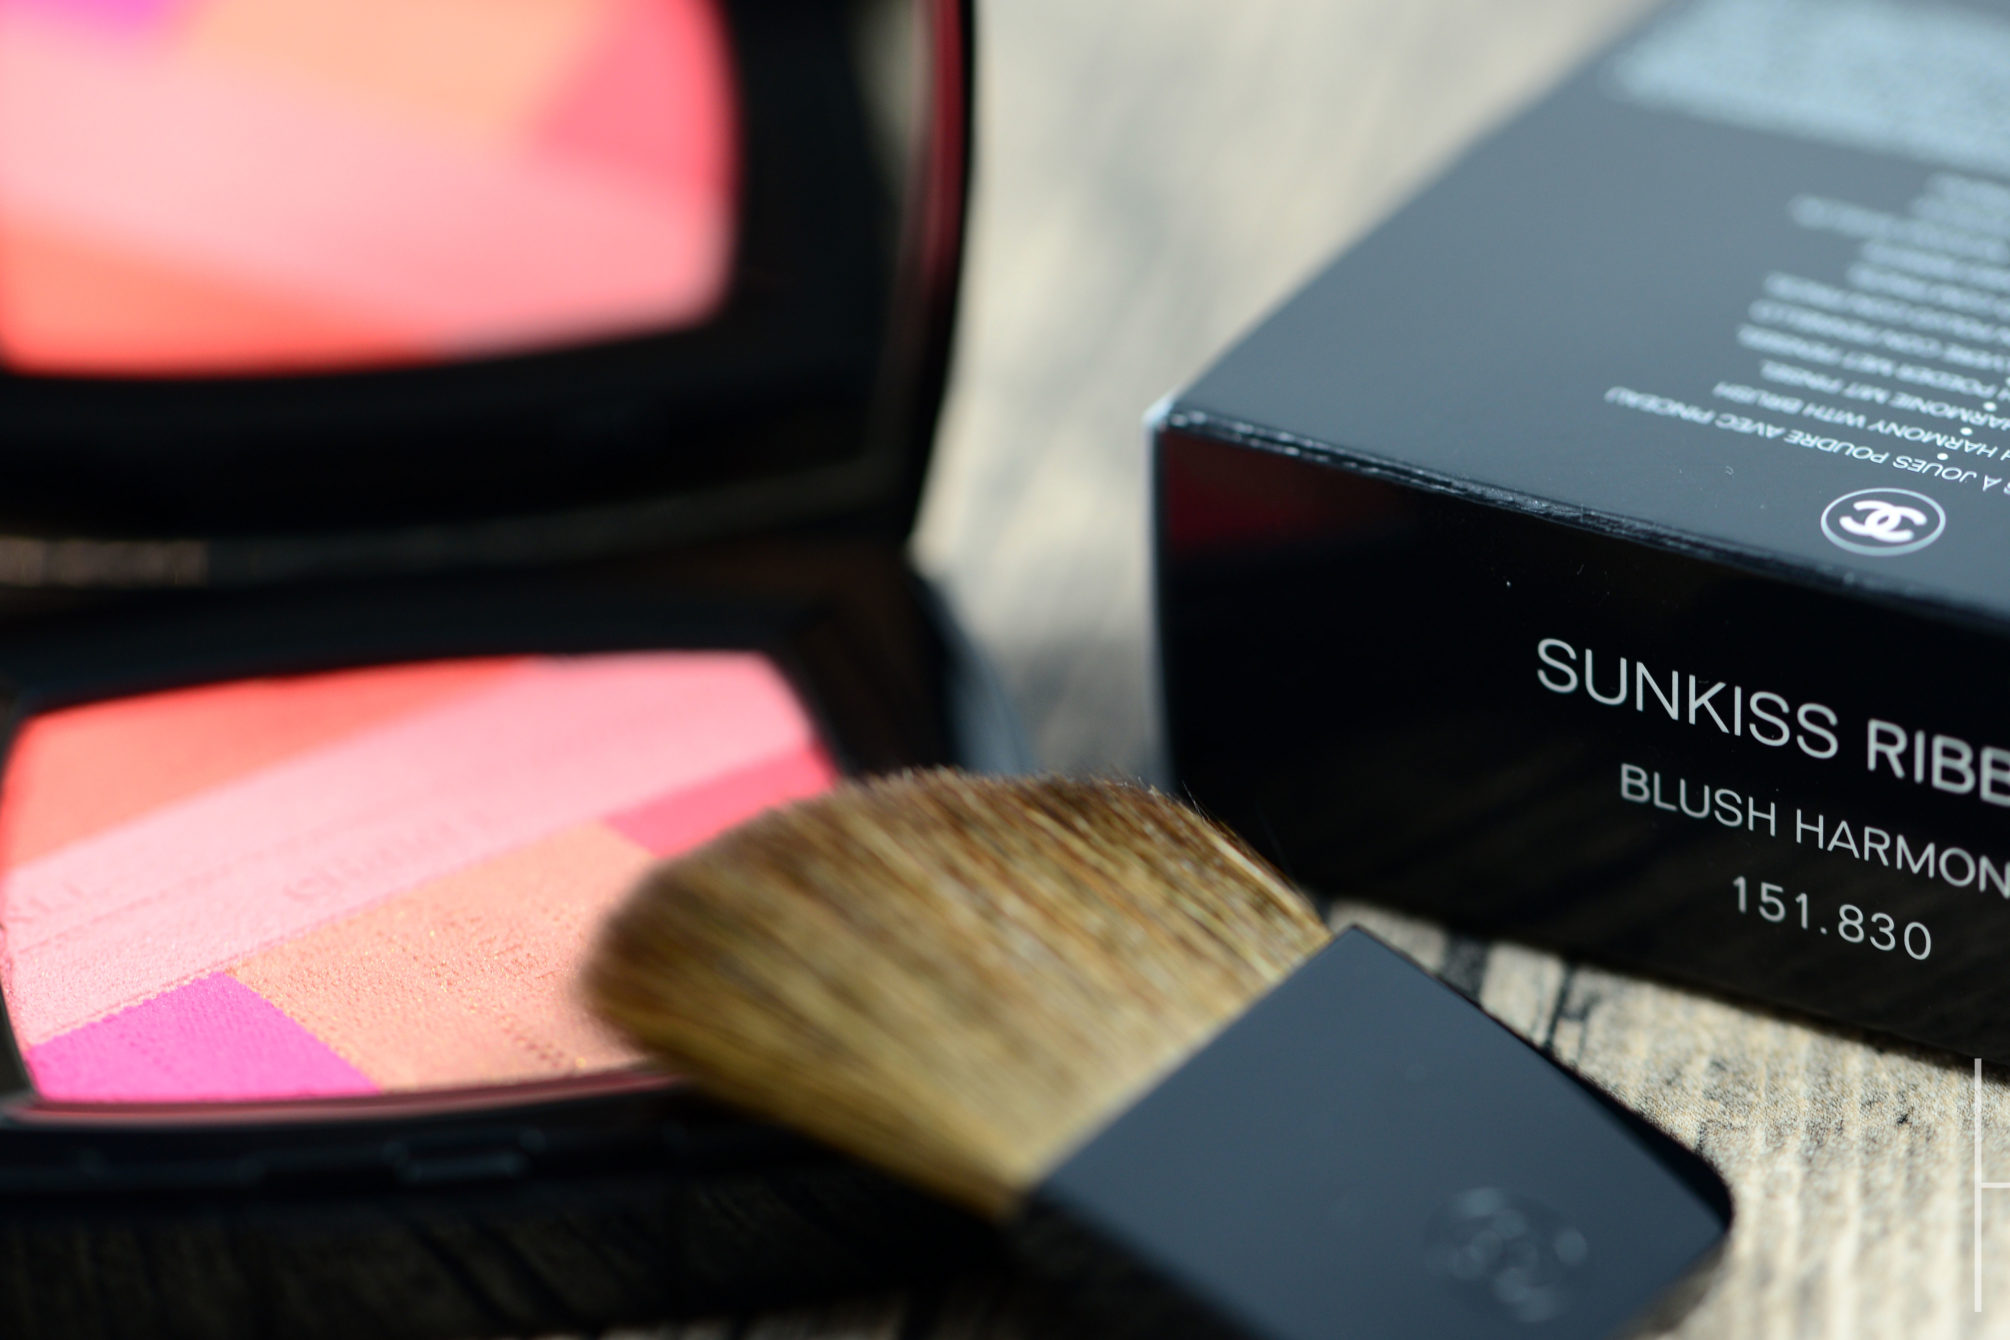 Chanel LA Sunrise Spring 2016 - Sunkiss Ribbon Blush Harmony - miranda loves